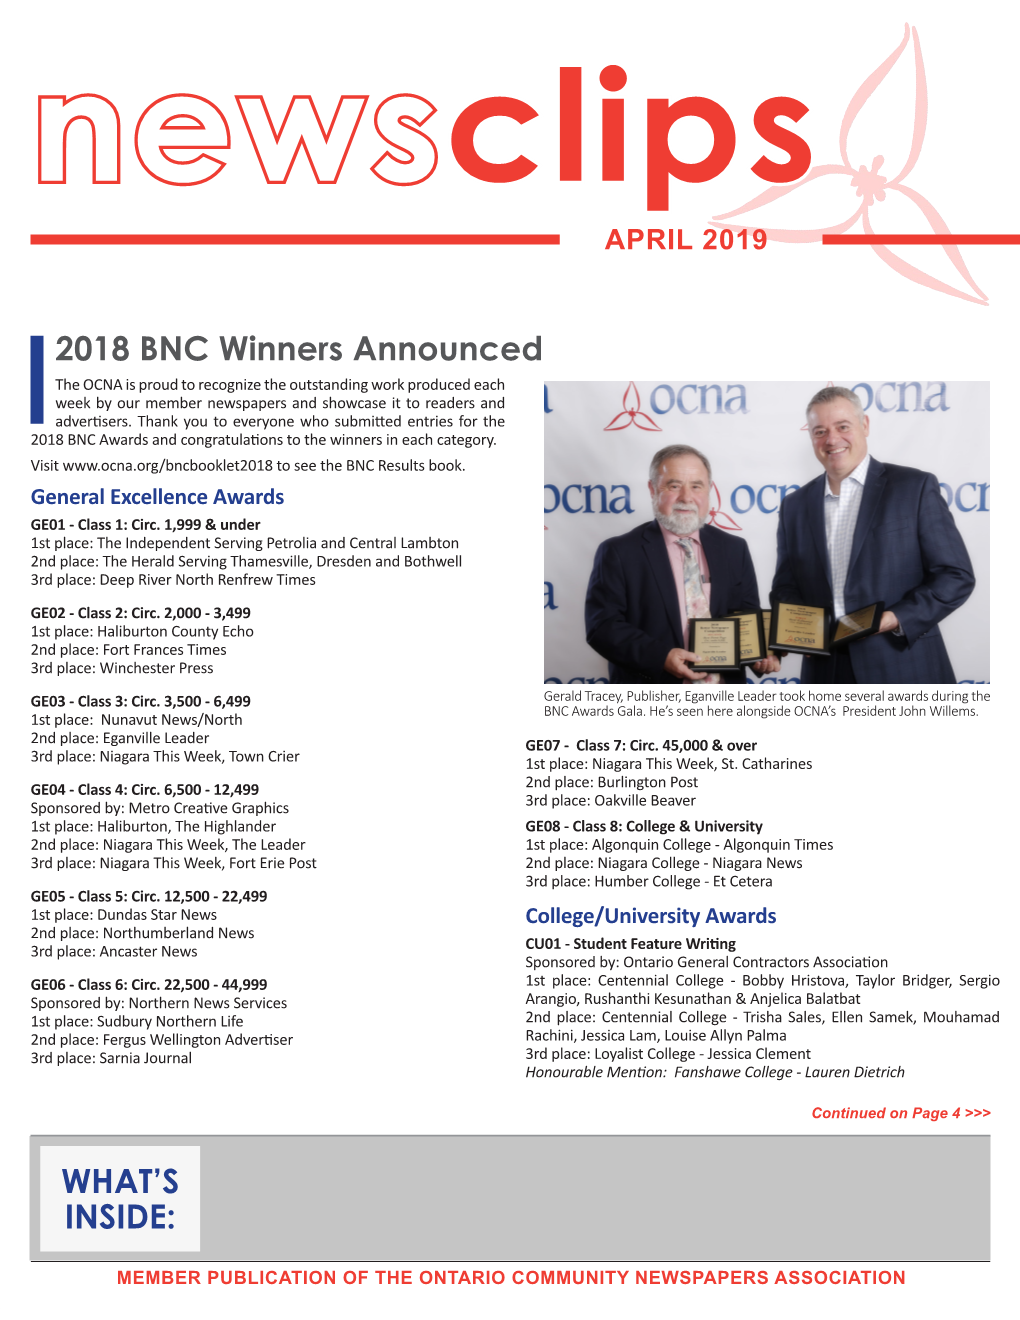 WHAT's INSIDE: 2018 BNC Winners Announced